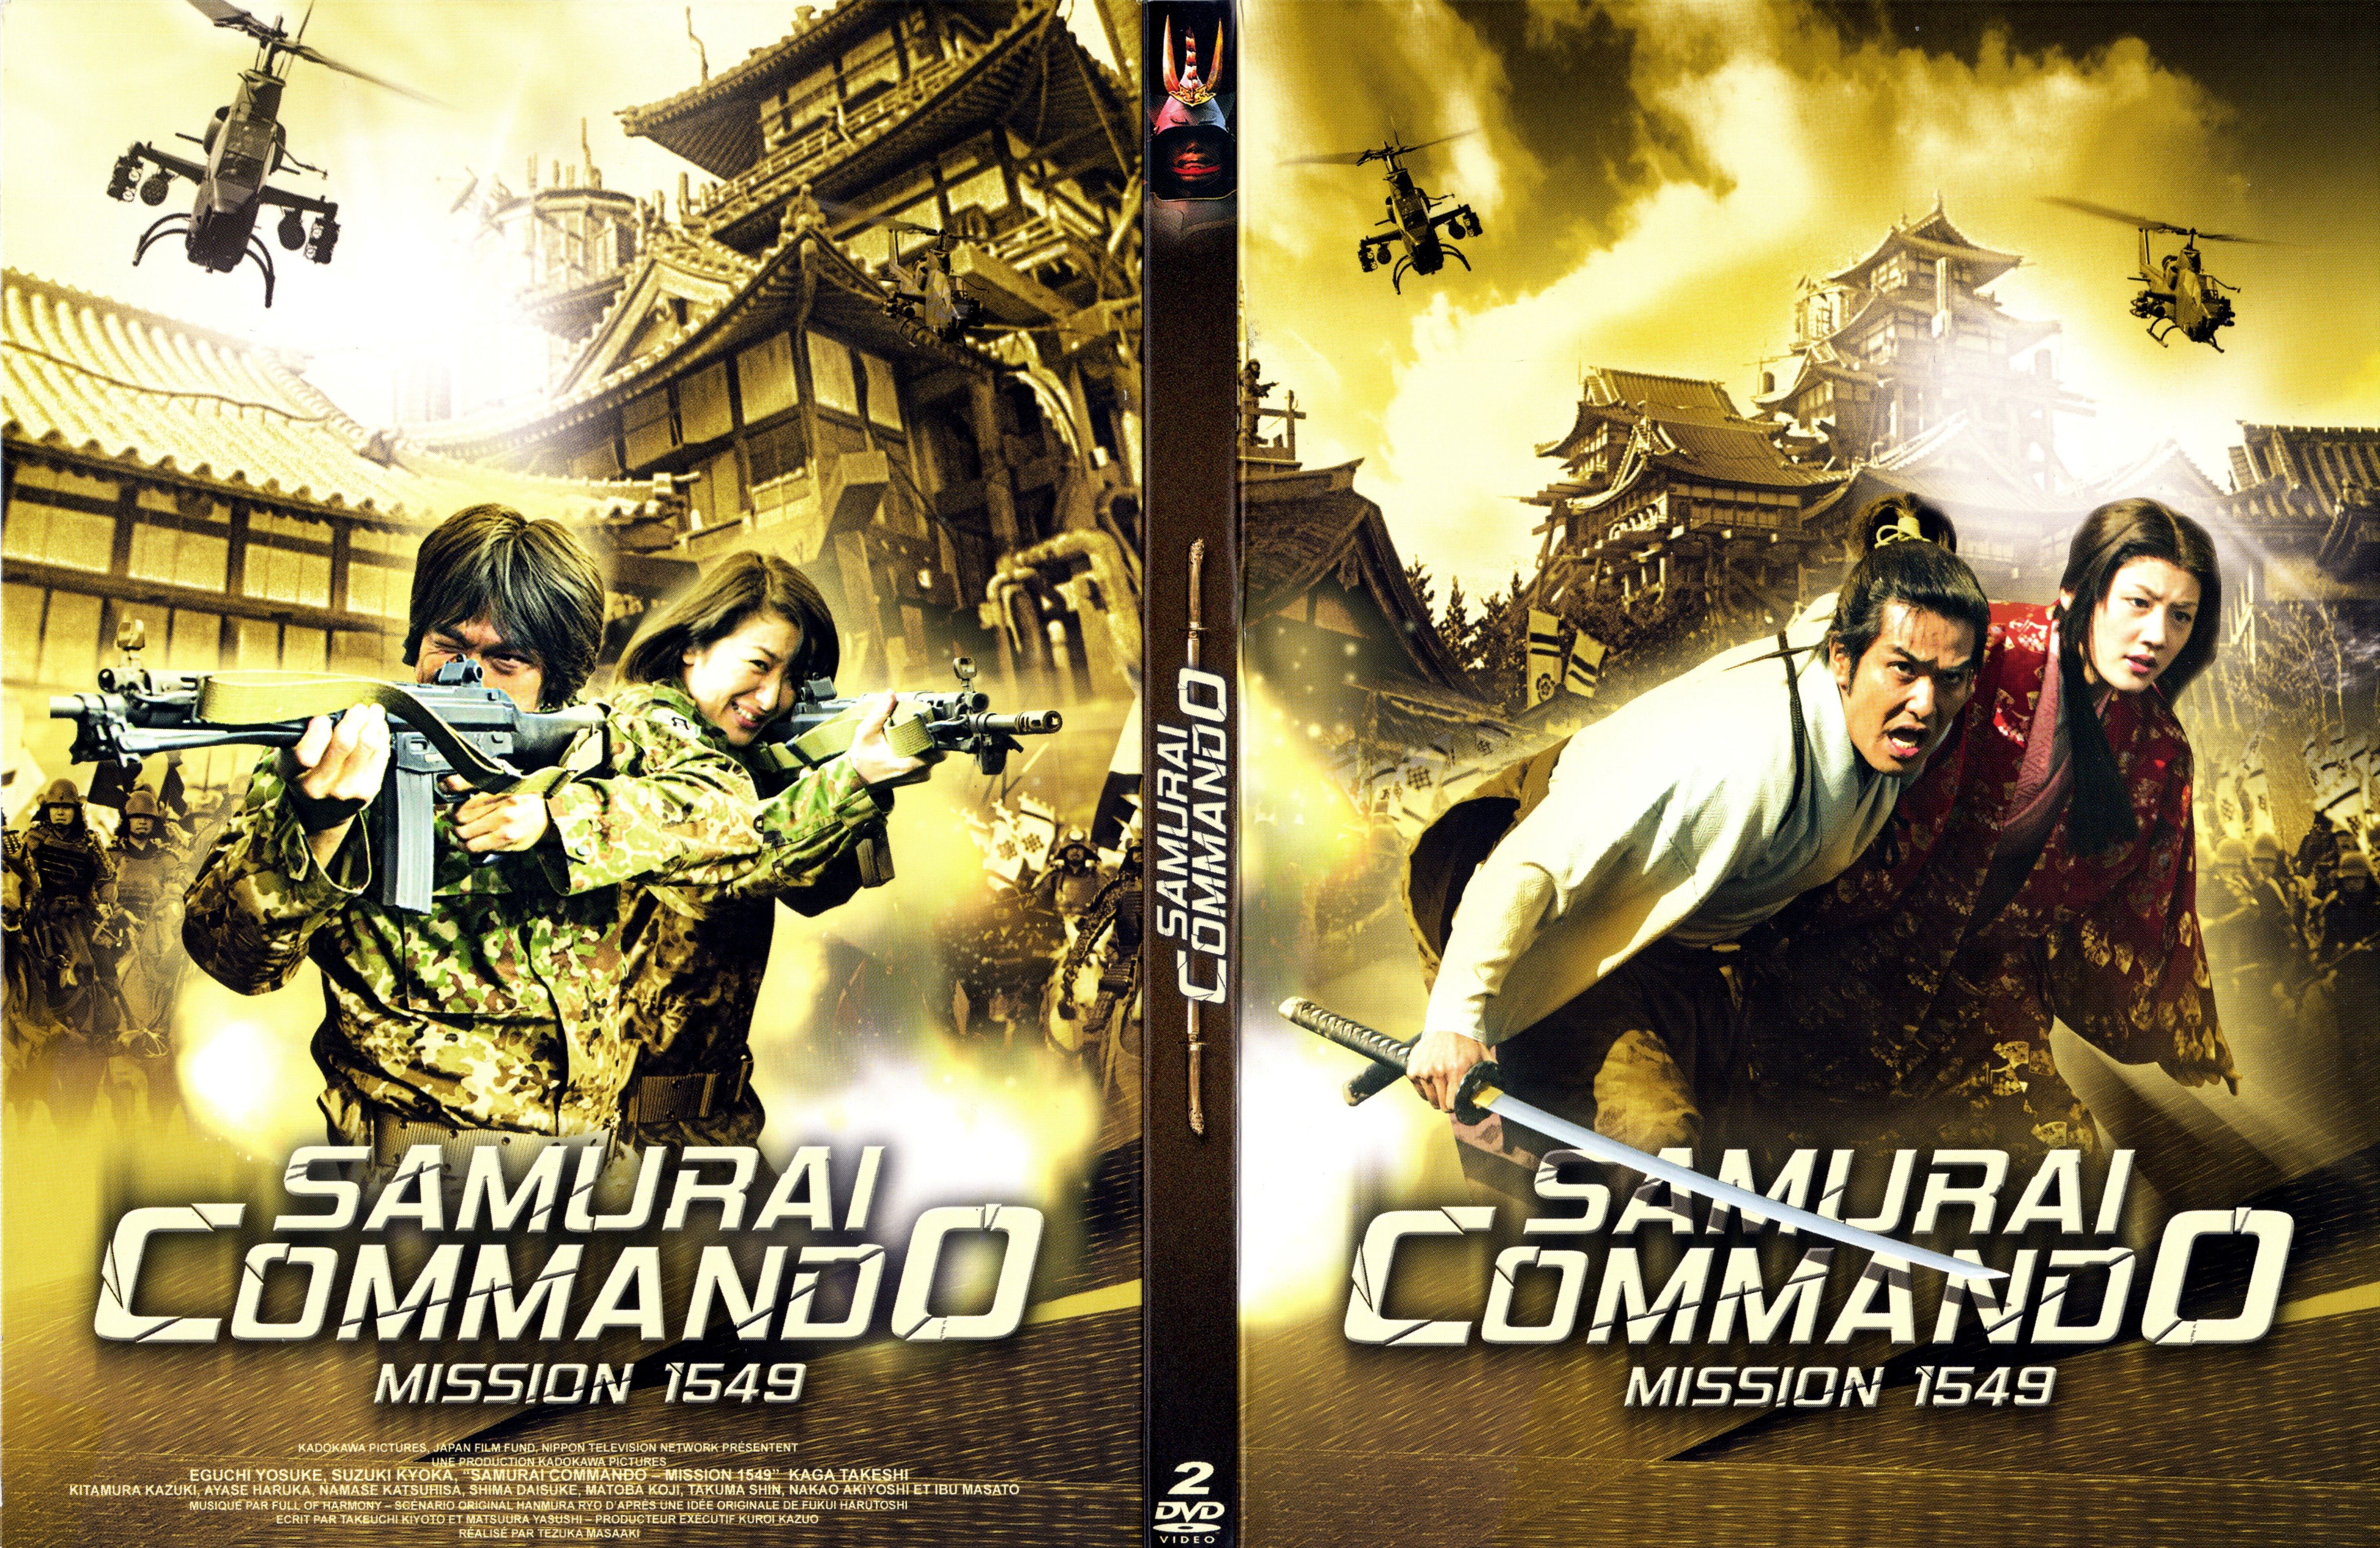 Jaquette DVD Samurai commando v4